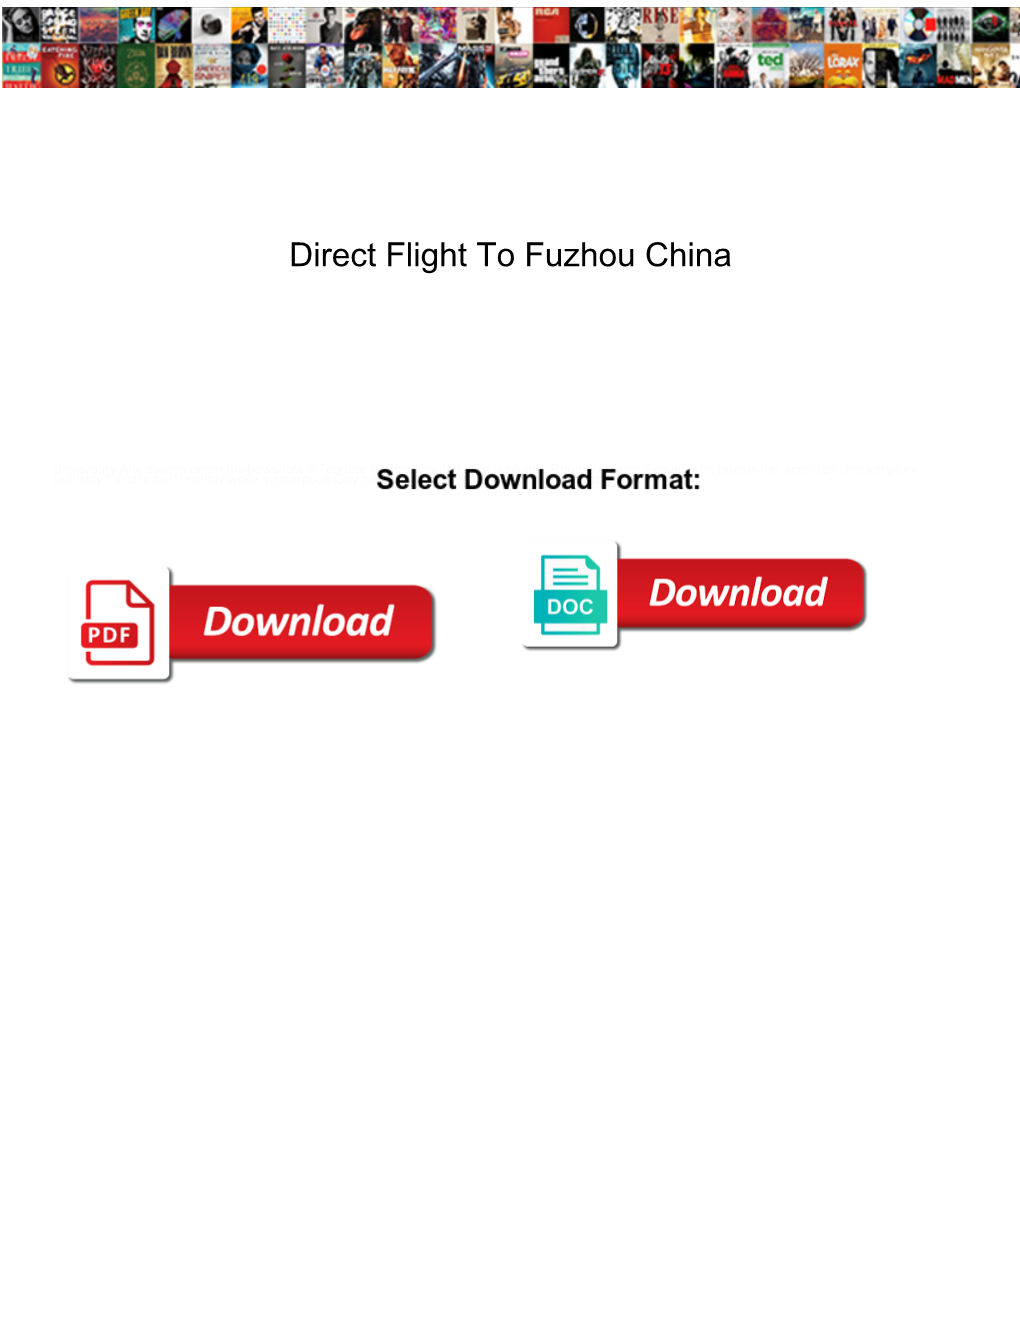 Direct Flight to Fuzhou China